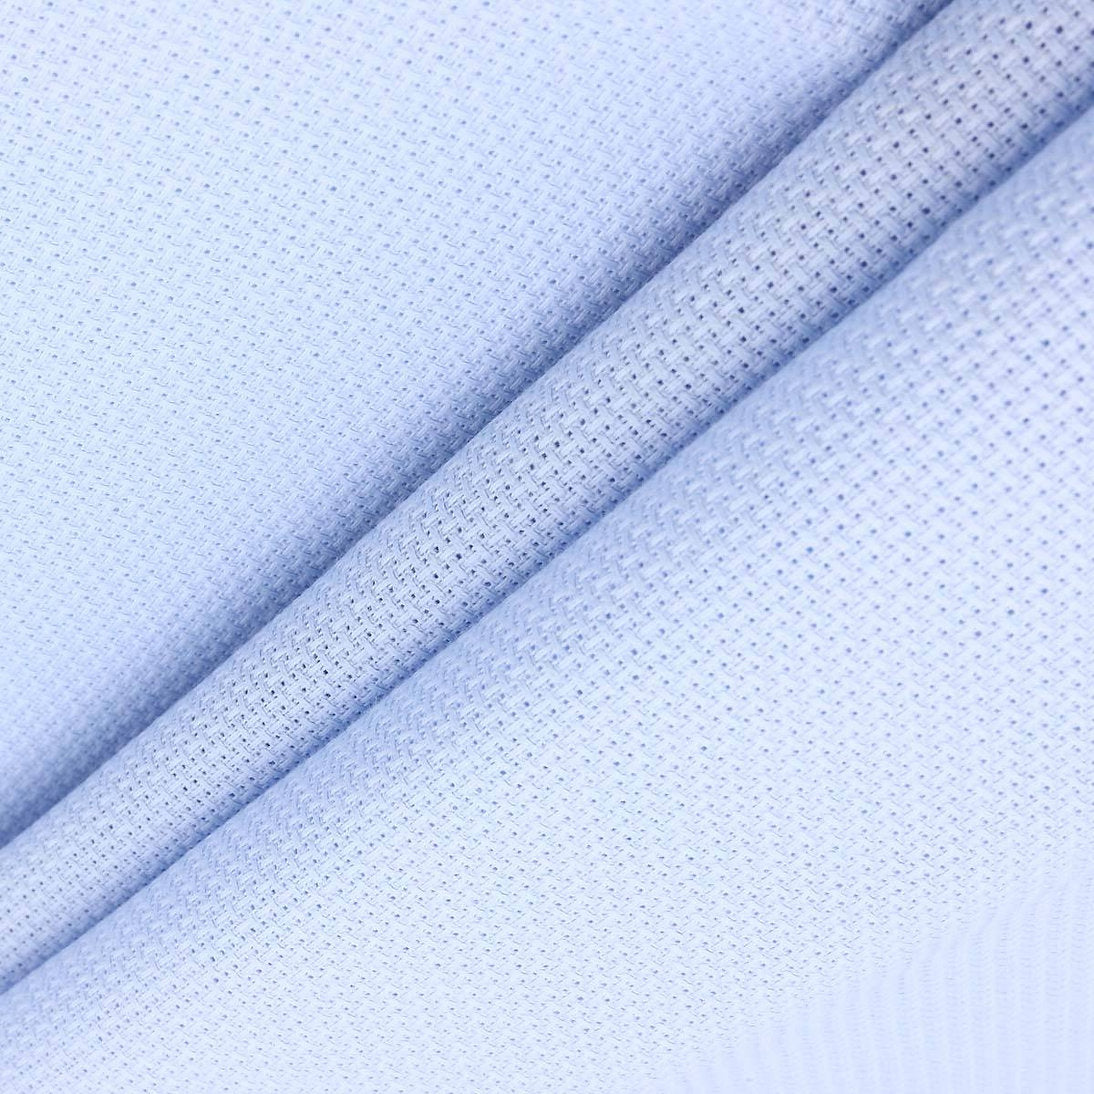 Aida cloth 14 count. ZWEIGART Light Blue - 3706/503